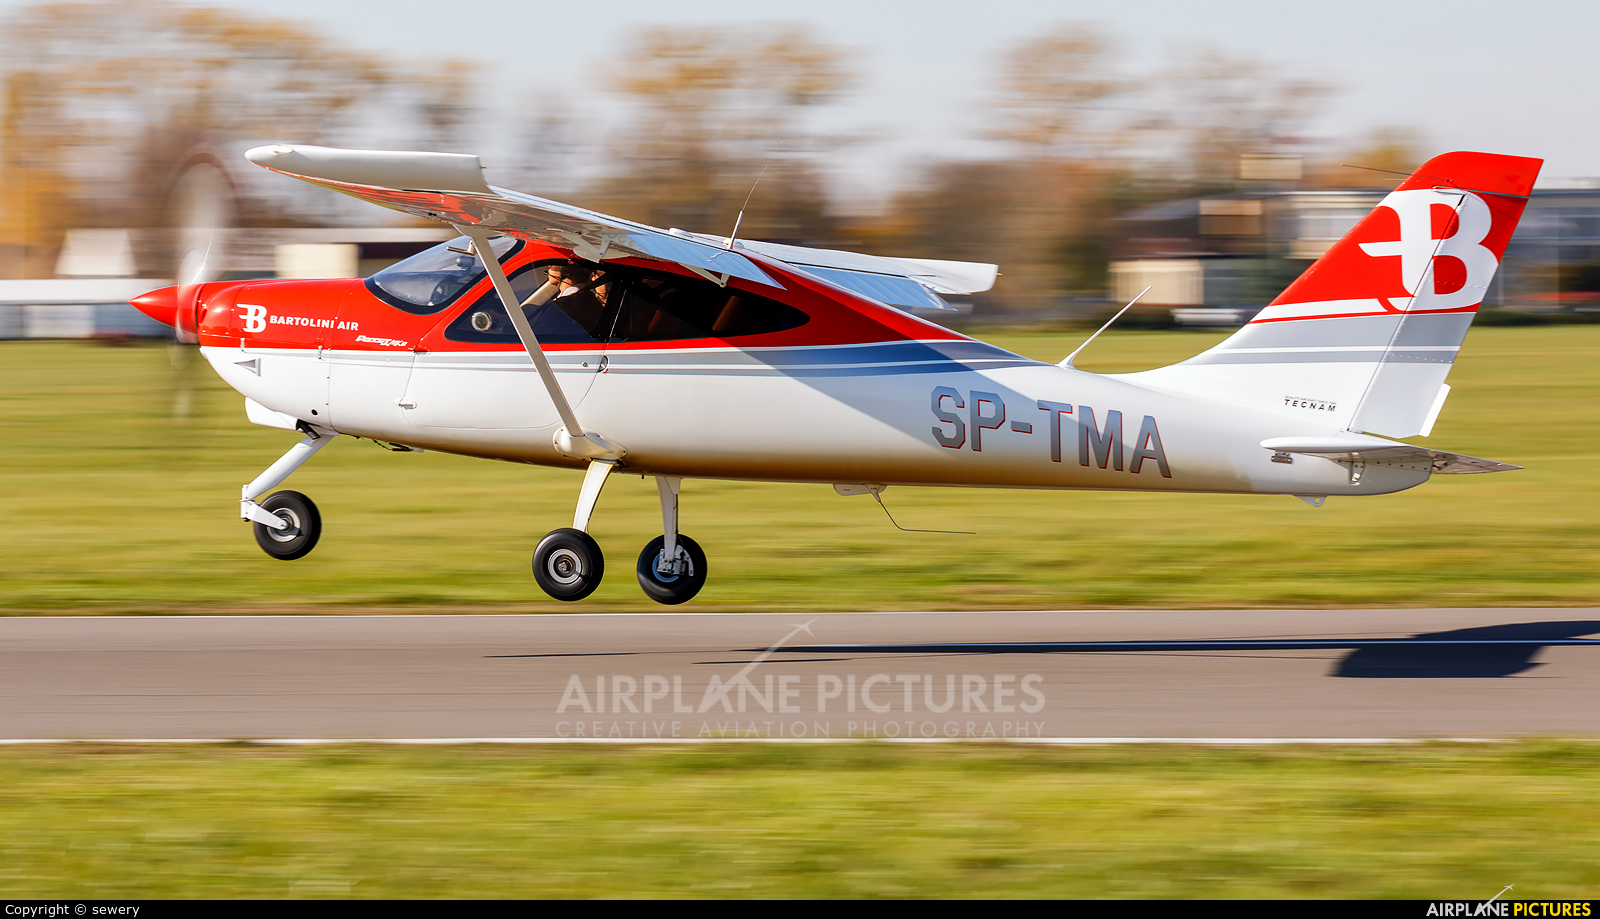 Bartolini Air SP-TMA aircraft at Piotrków Trybunalski